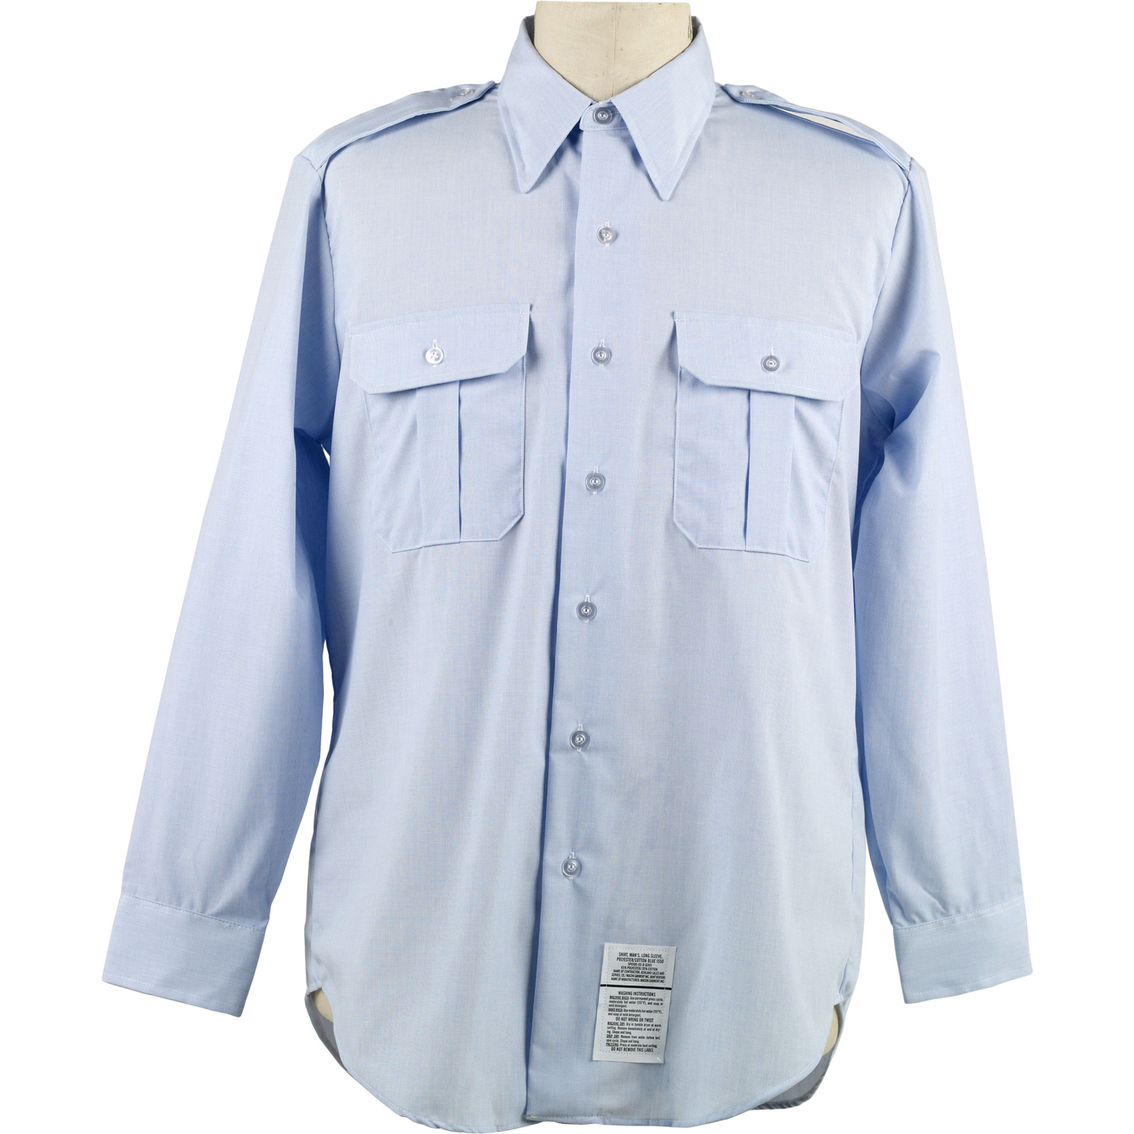 Dlats Men's Blue Shirt | Shirts | Military | Shop The Exchange